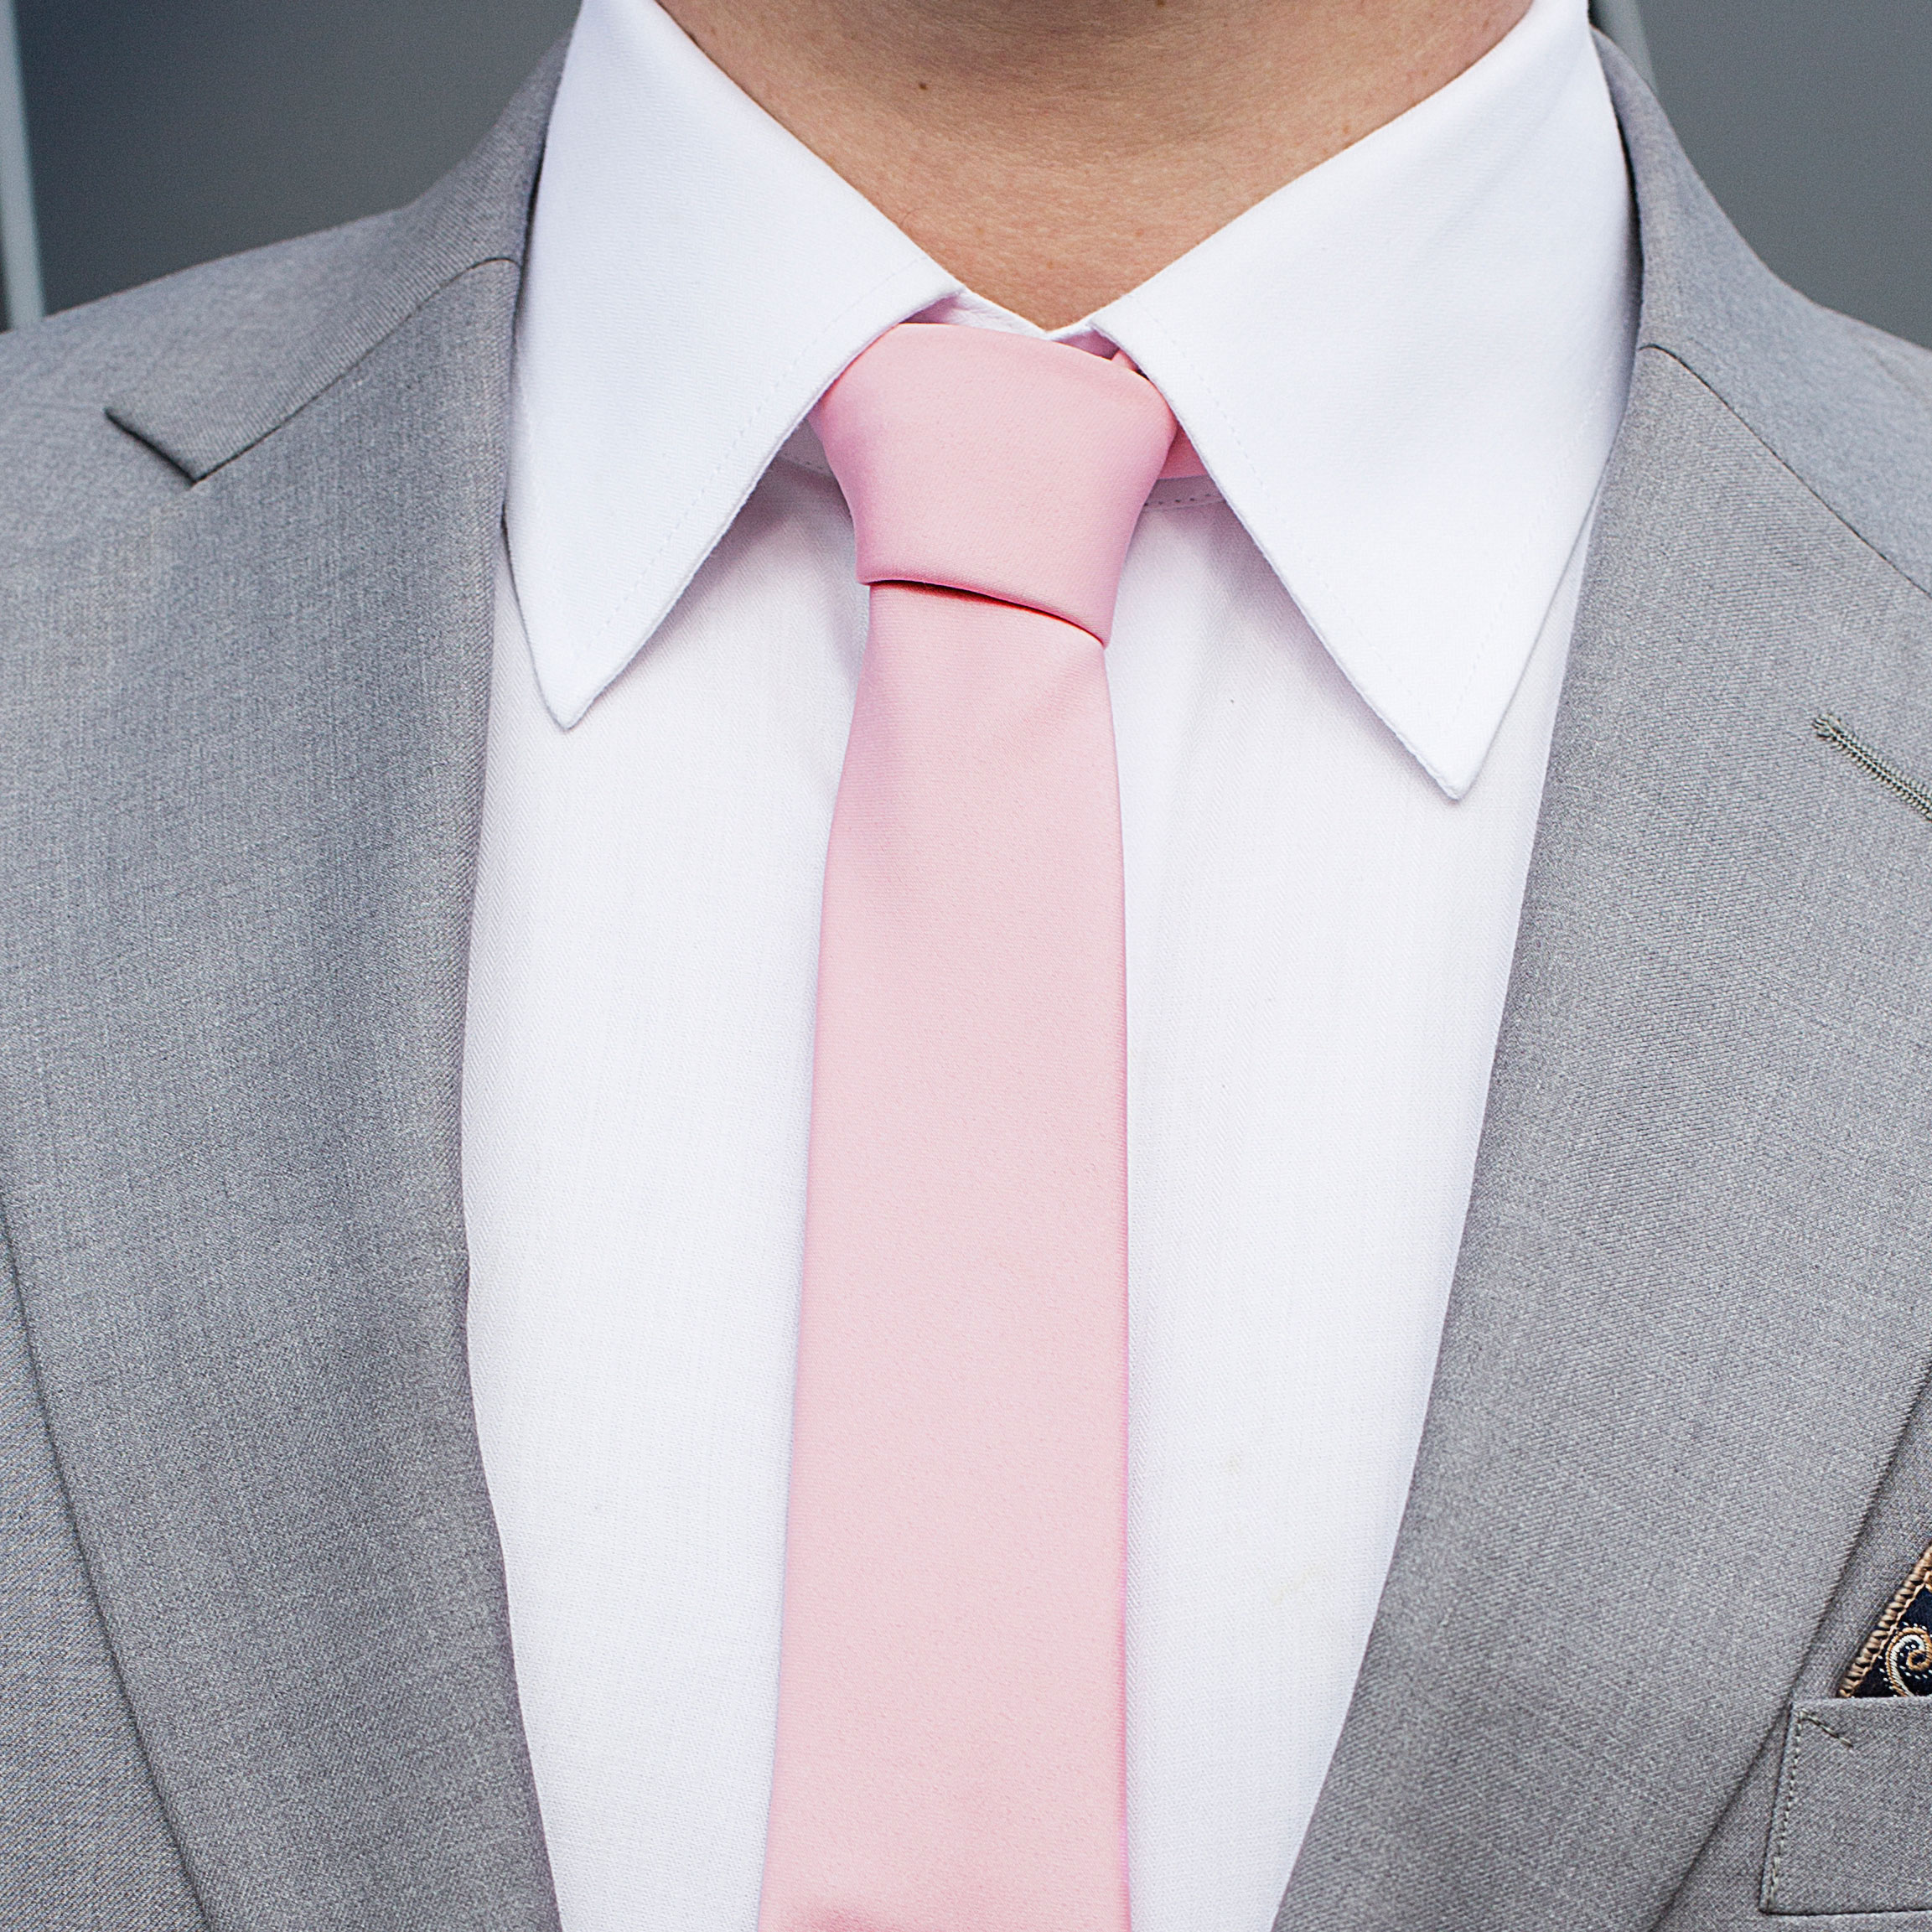 Corbata básica rosa 6 cm | ¡En Trendhim